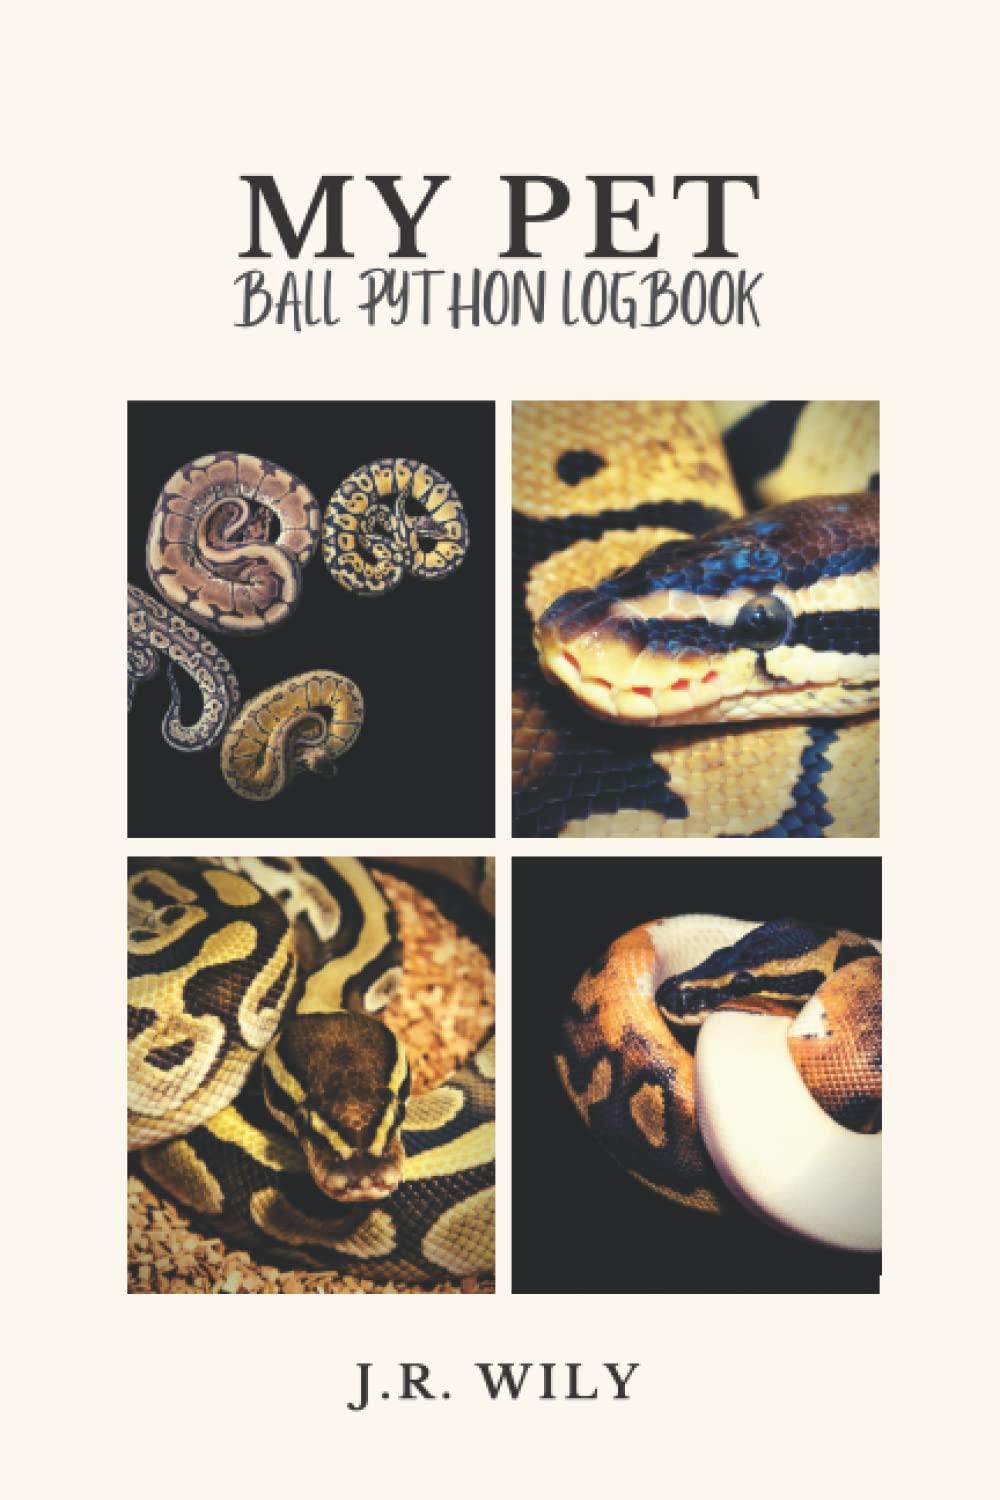 my pet ball python logbook 1st edition j.r. wily b09pmhyqq7, 979-8795555539